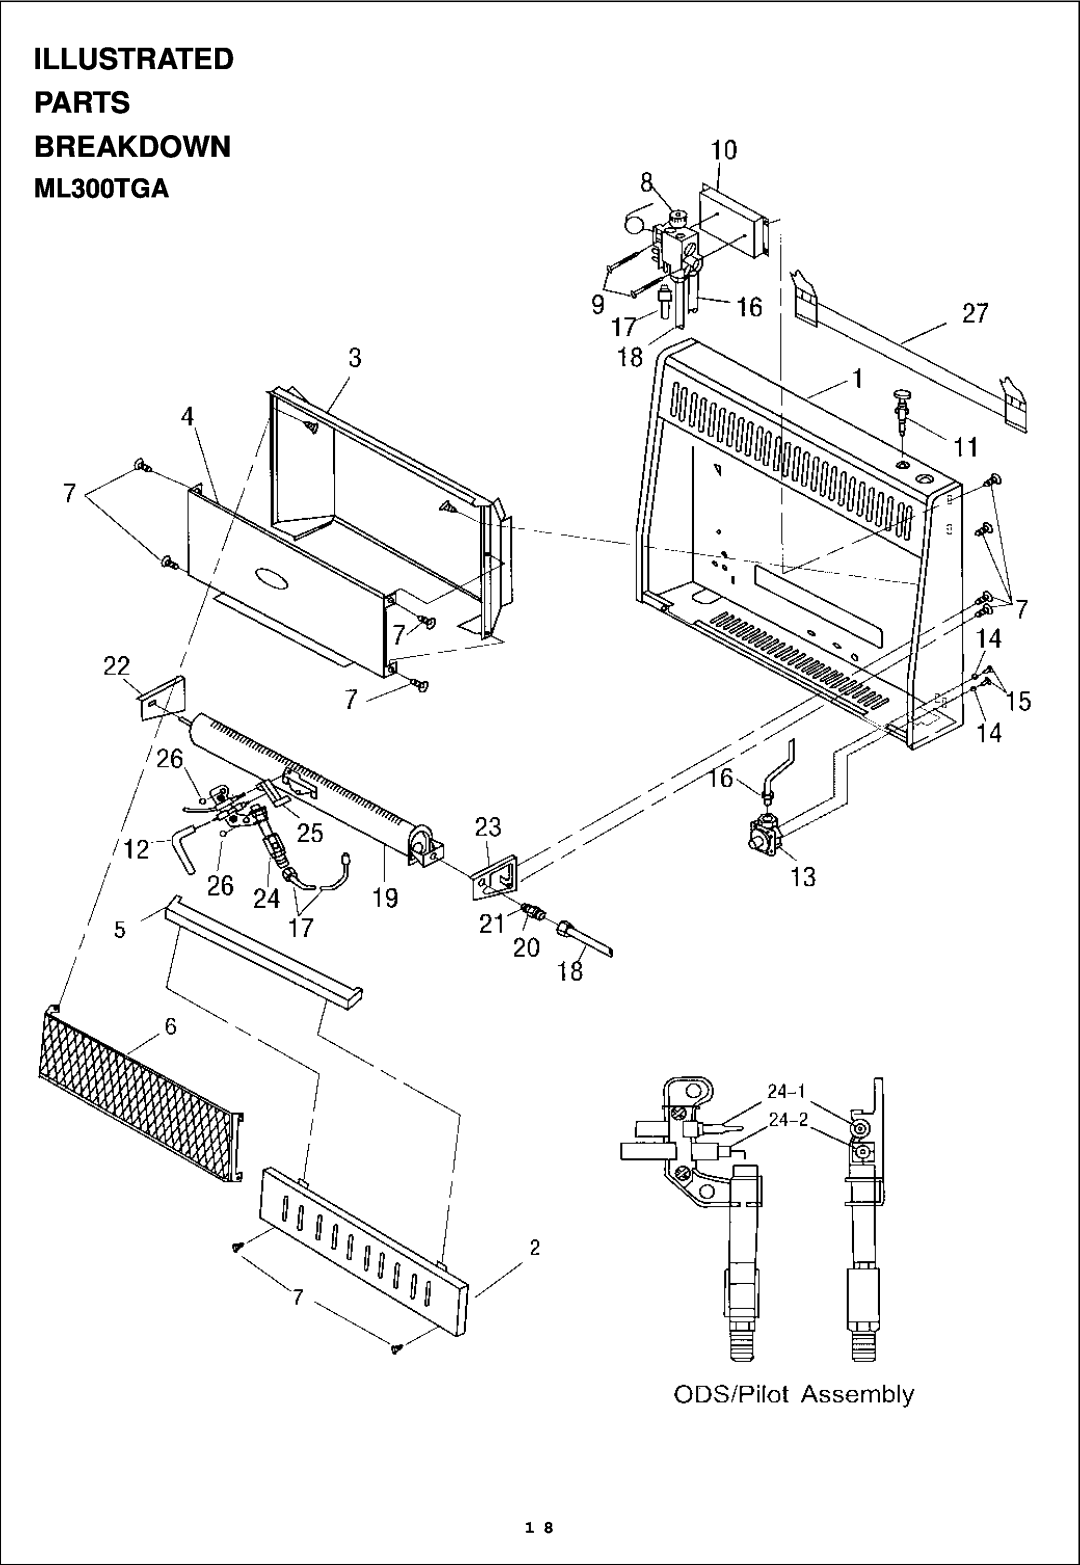 Procom ML300HGA installation manual Illustrated Parts Breakdown, ML300TGA 